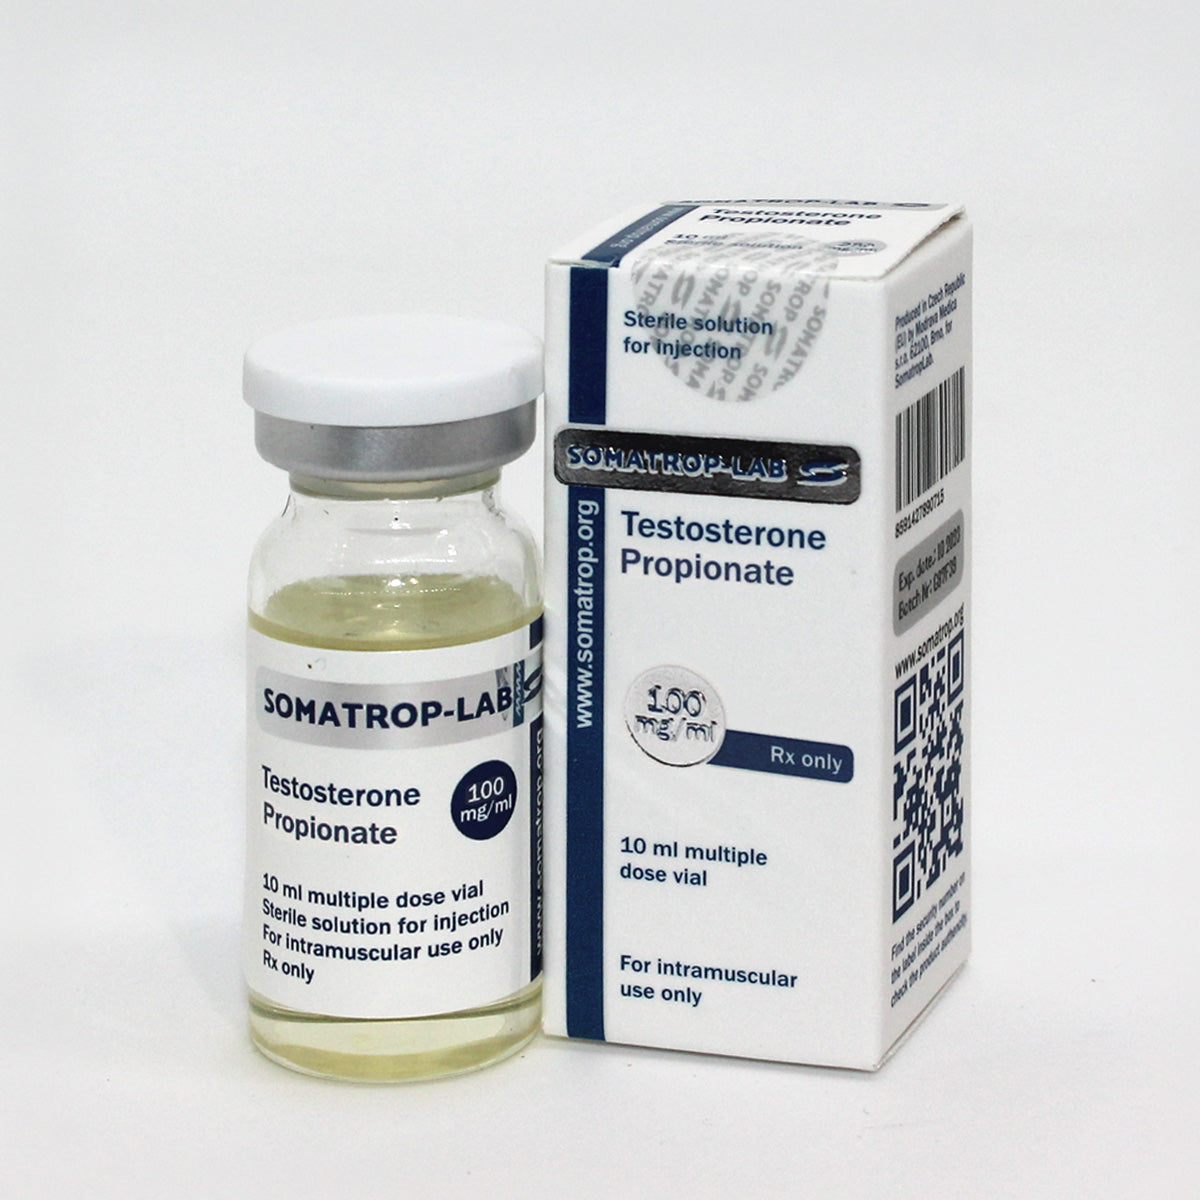 Somatrop-Lab Testosterone Propionate: 10ml vial, 100mg/ml. Front of the packaging.